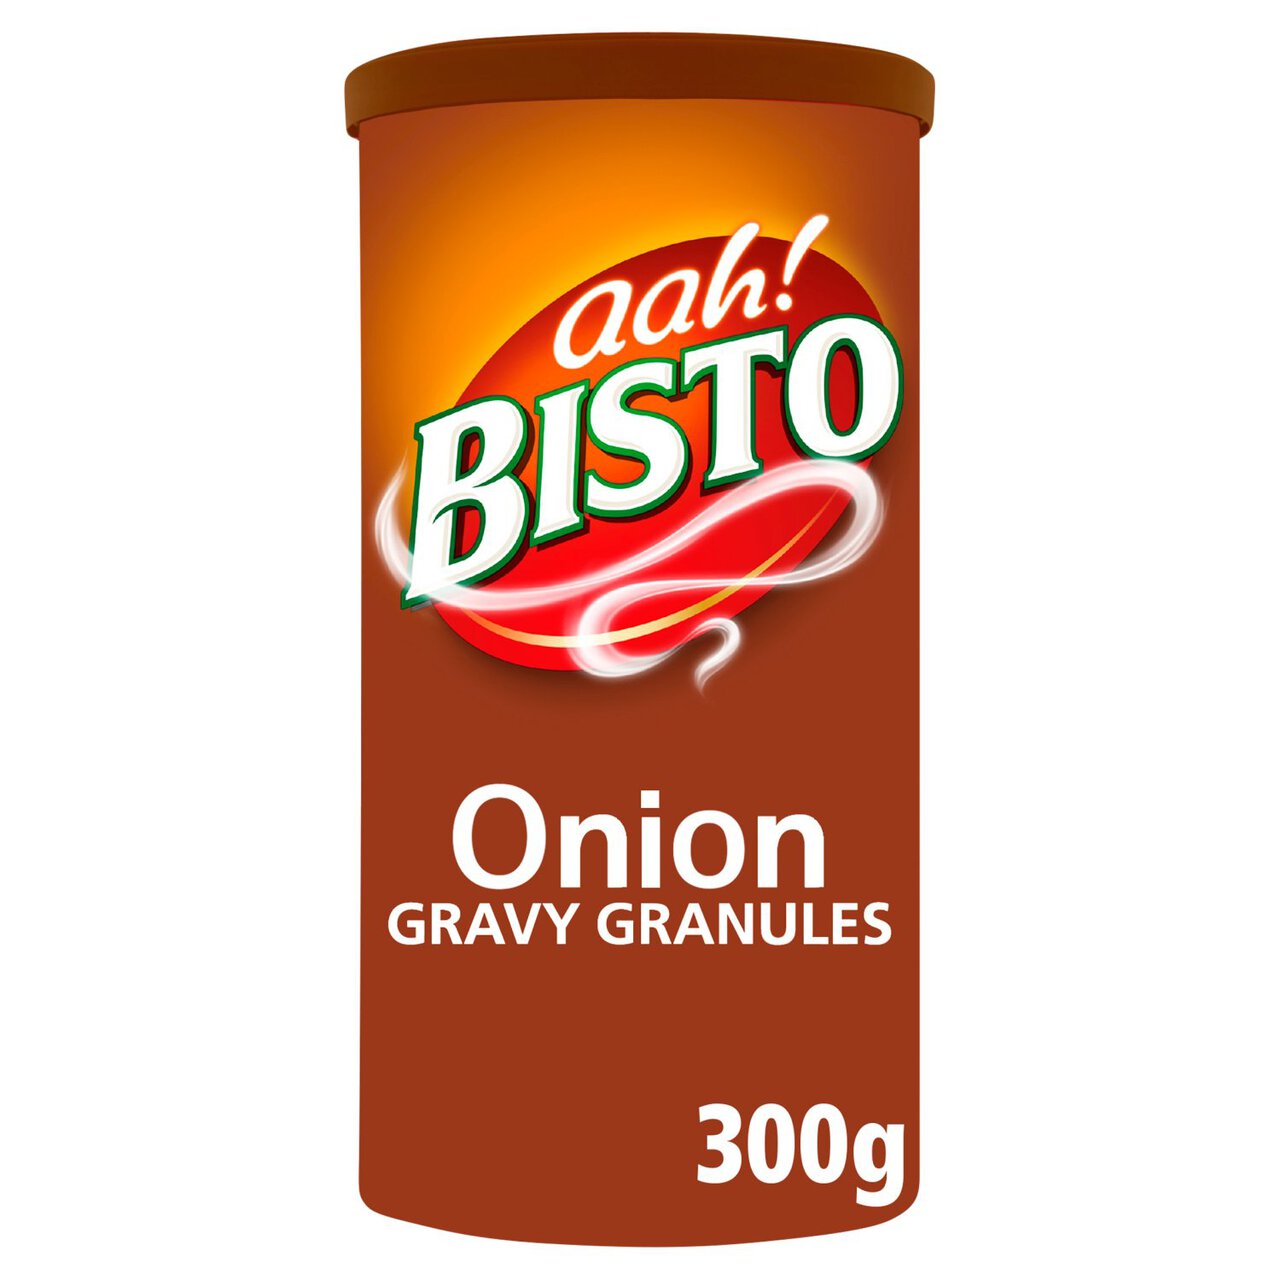 Bisto Onion Gravy Granules 300g